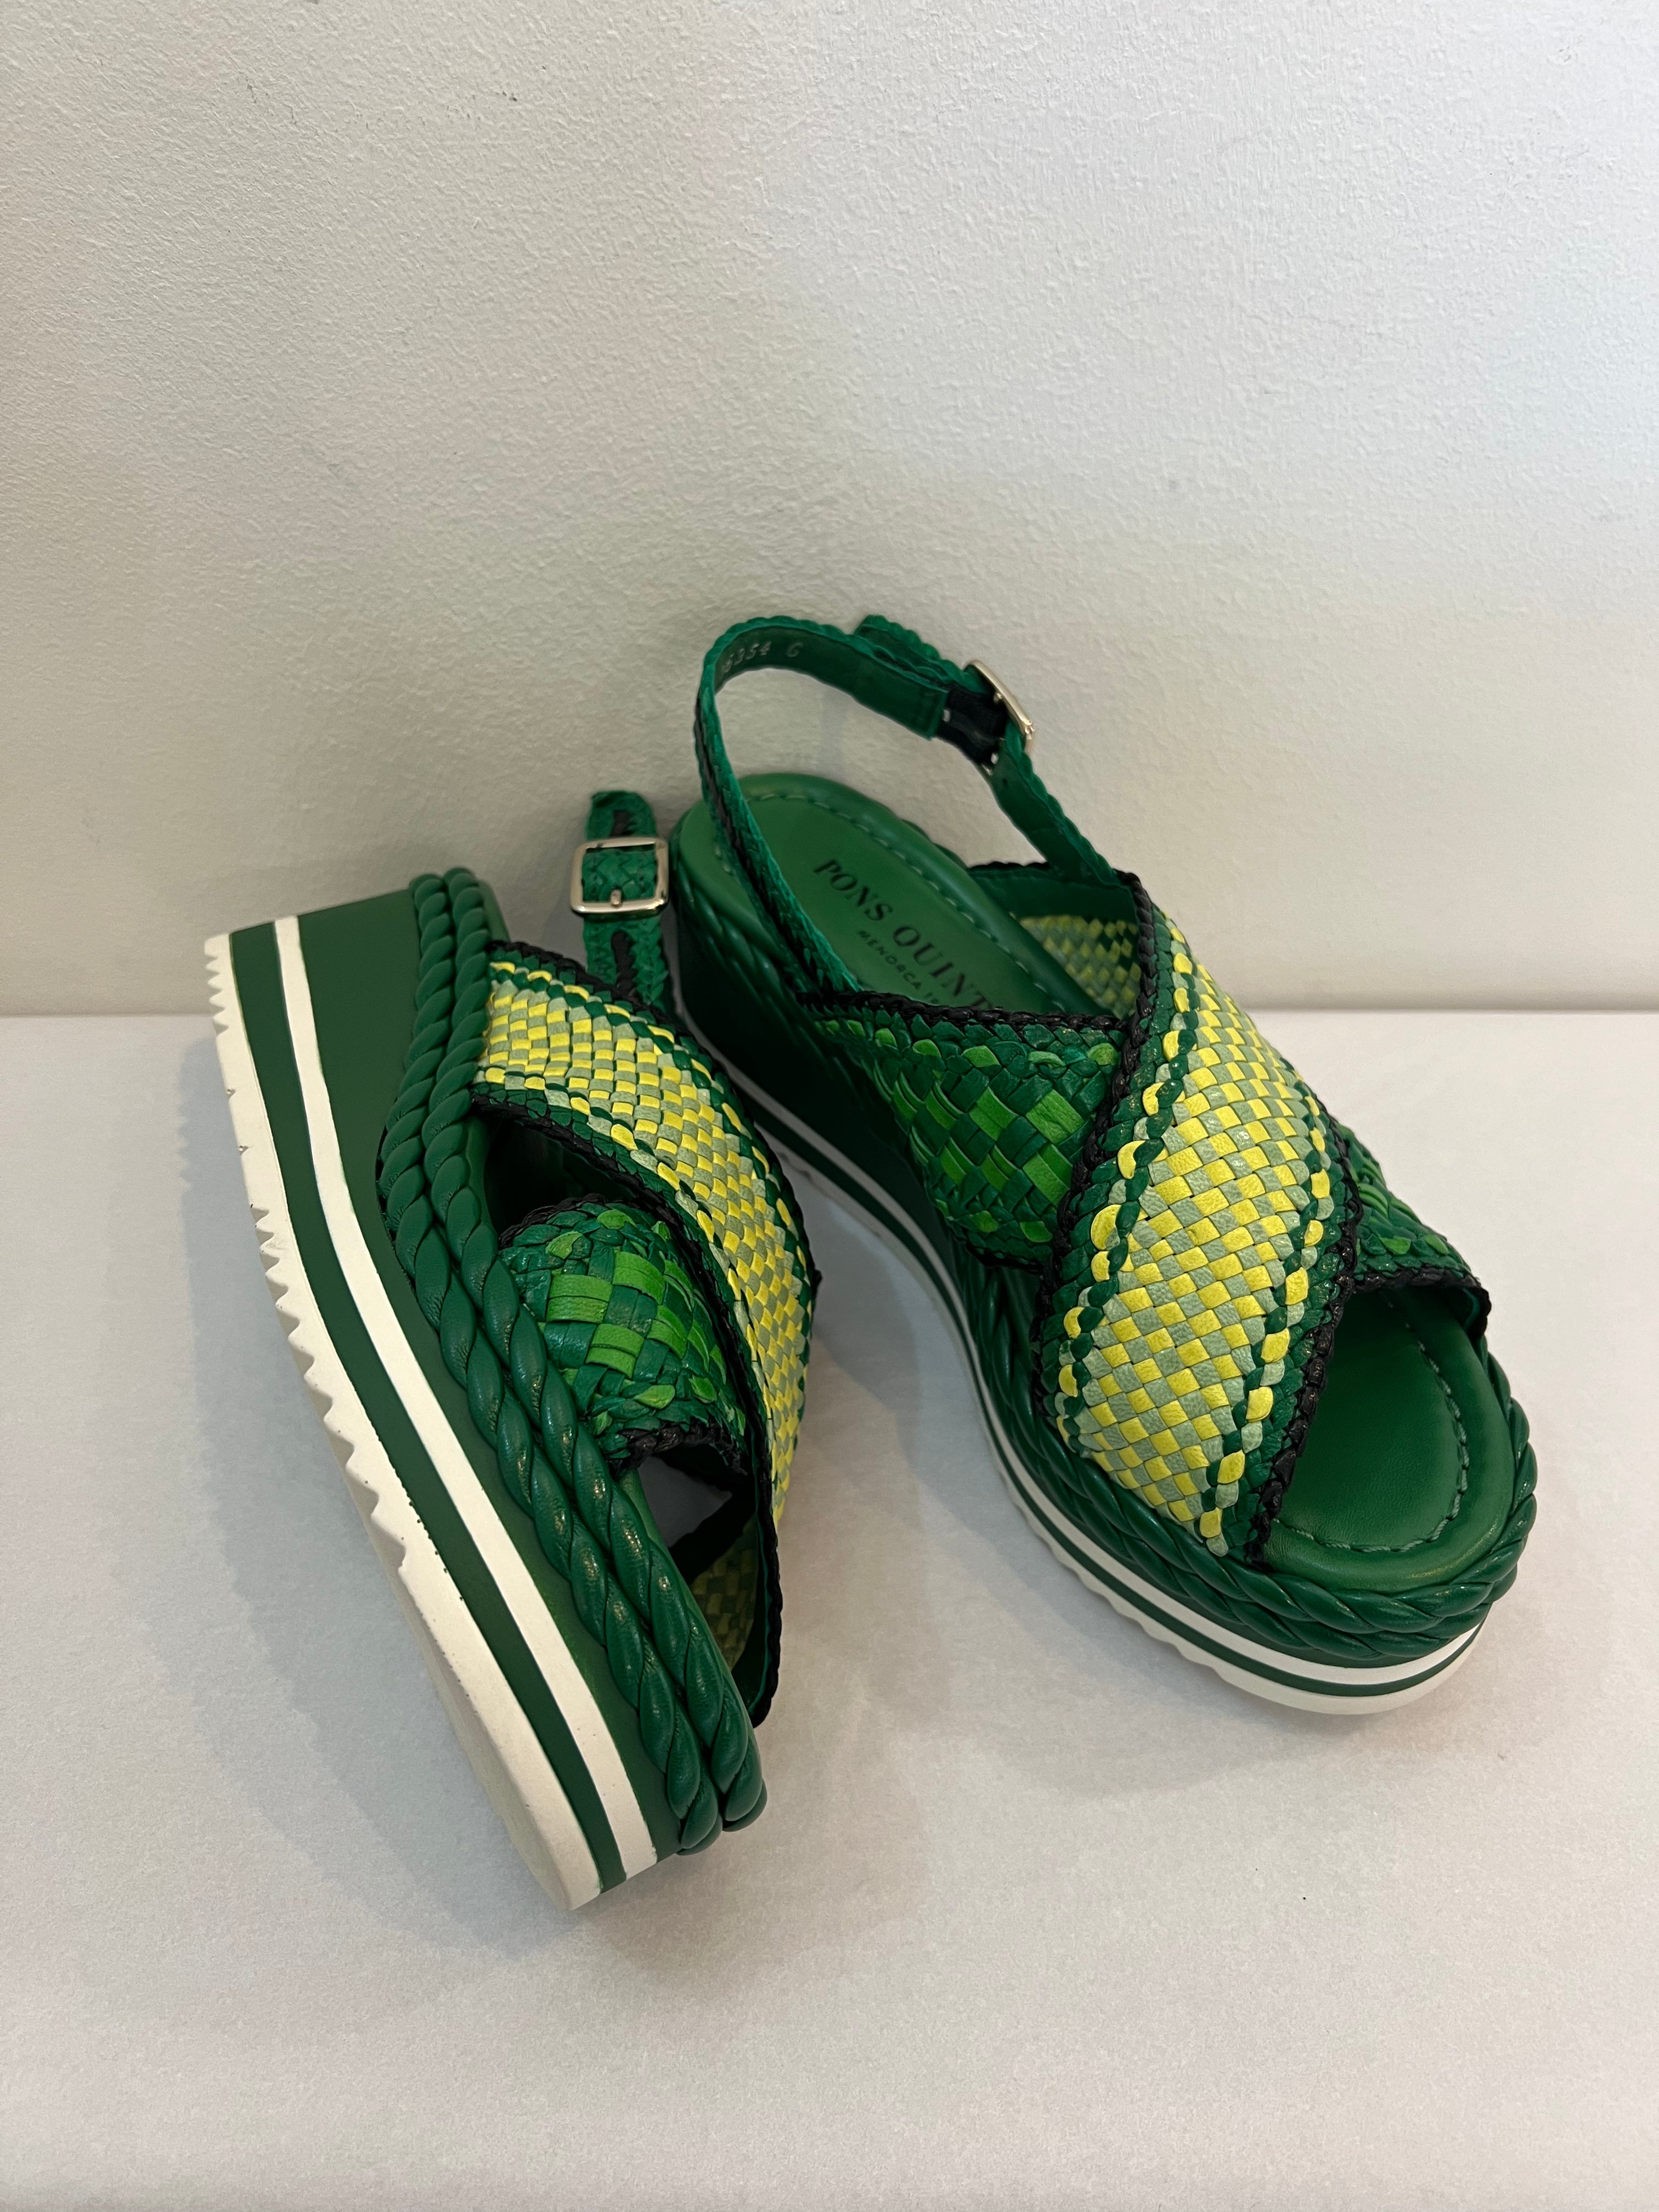 Hetre Alresford Hampshire Shoe Store Pons Quintana Green Woven Wedge Sandal